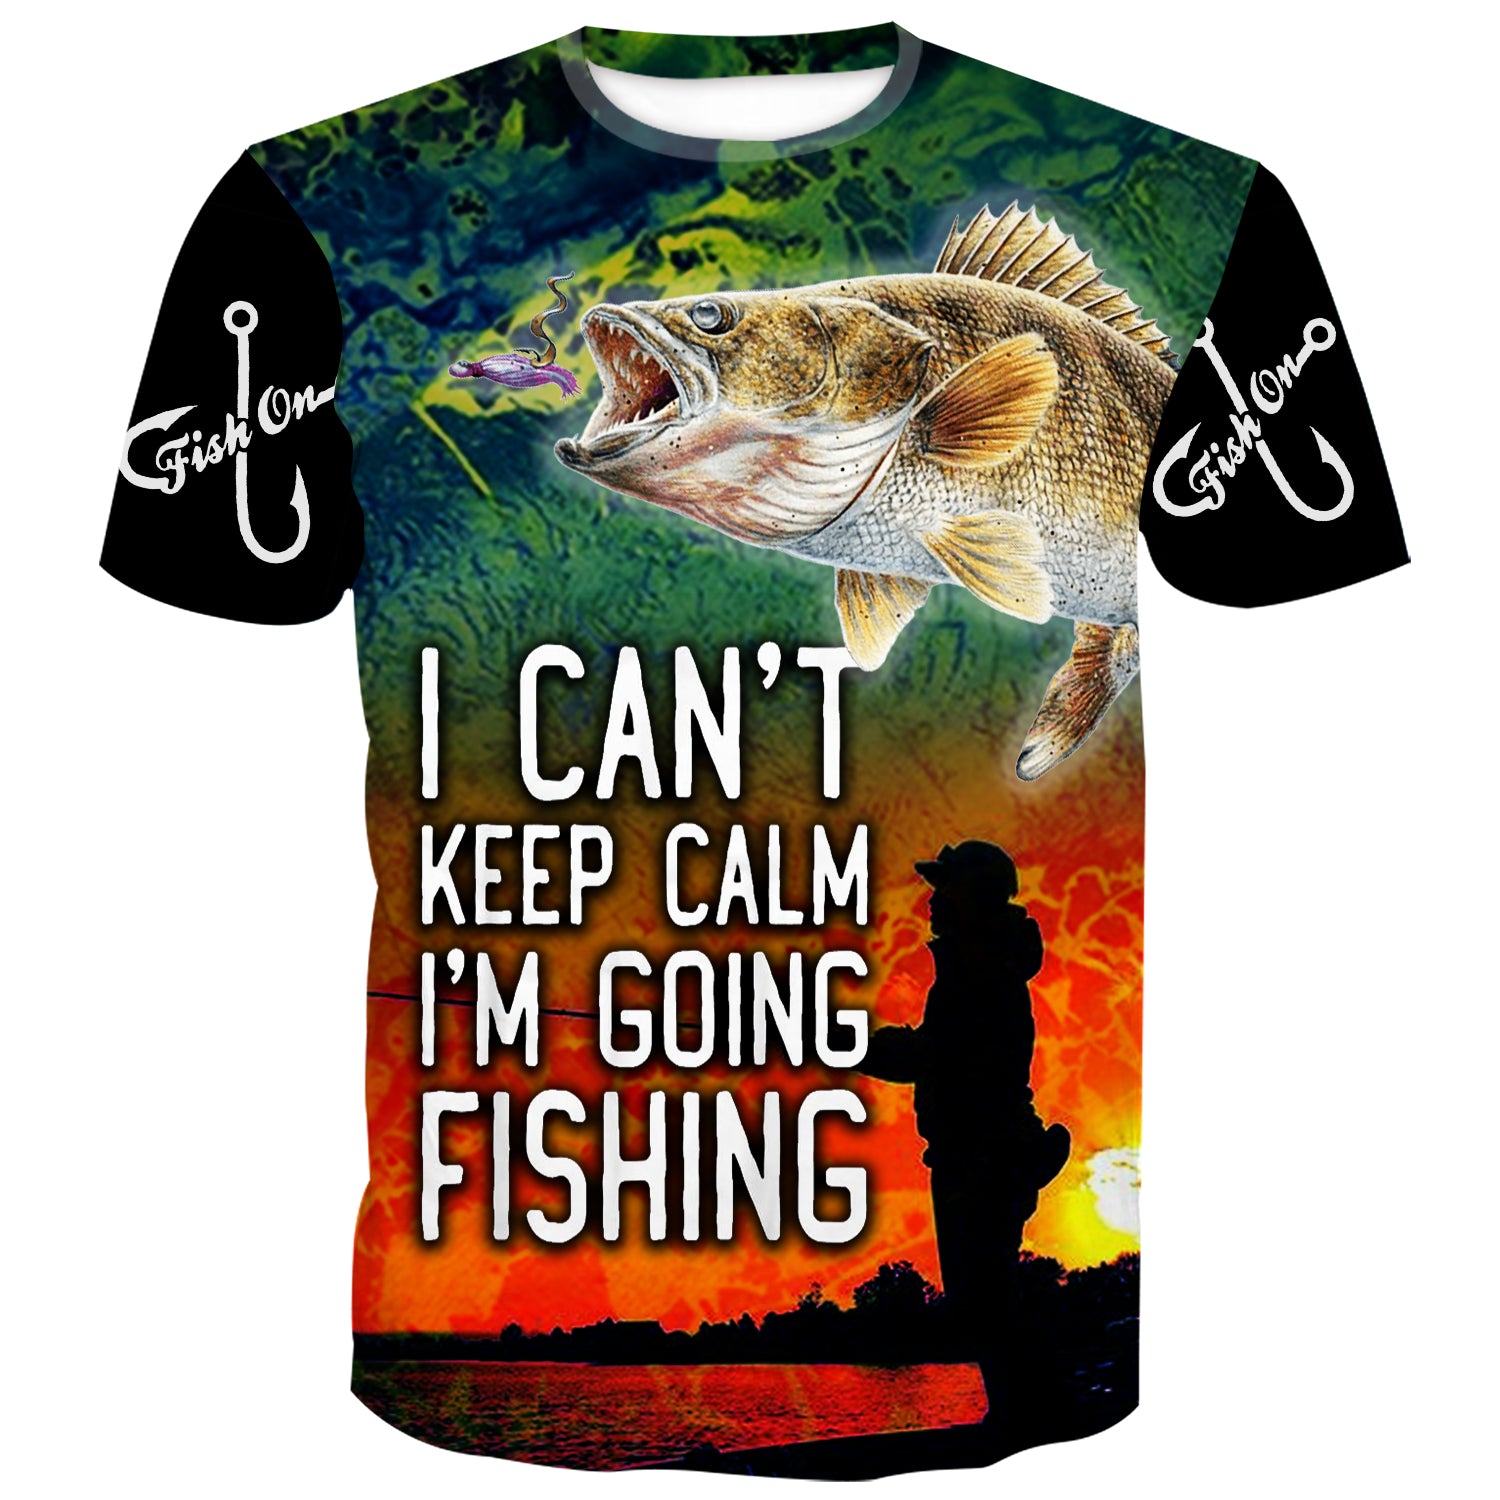 I Can't Keep Calm, I'm Going Fishing - T-Shirt